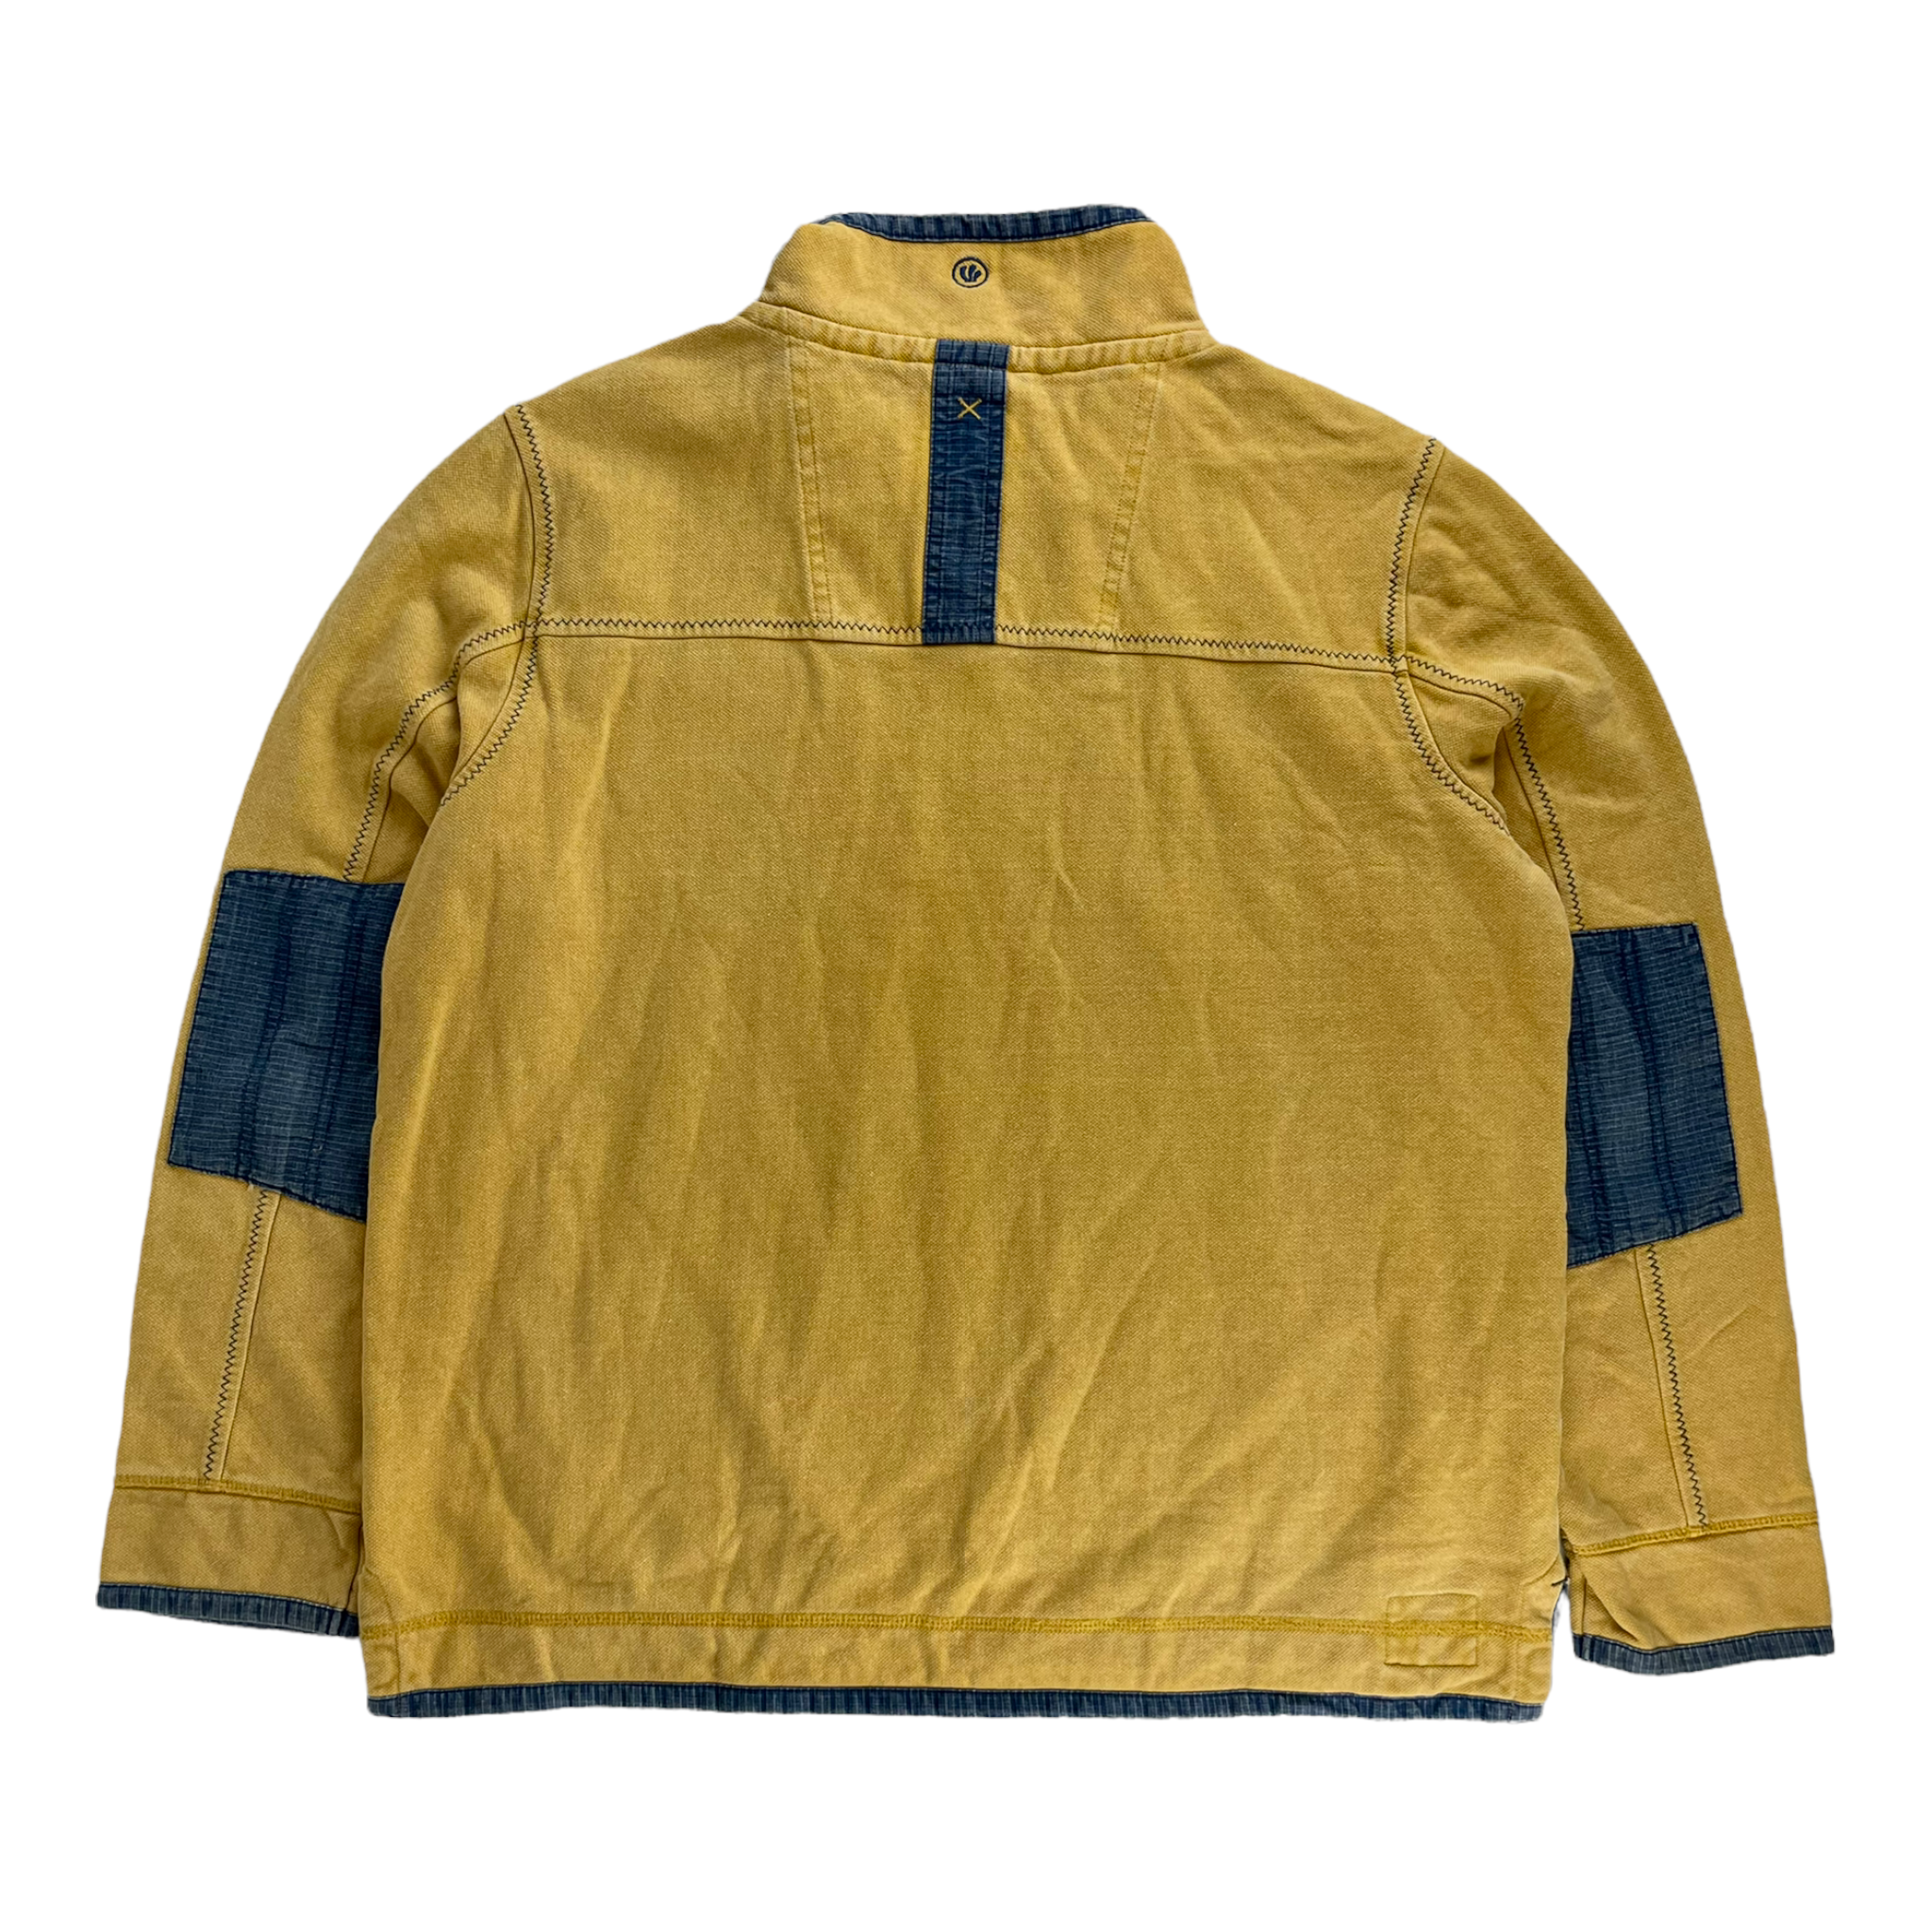 Vintage 80s FatFace Sweatshirt - Restorecph